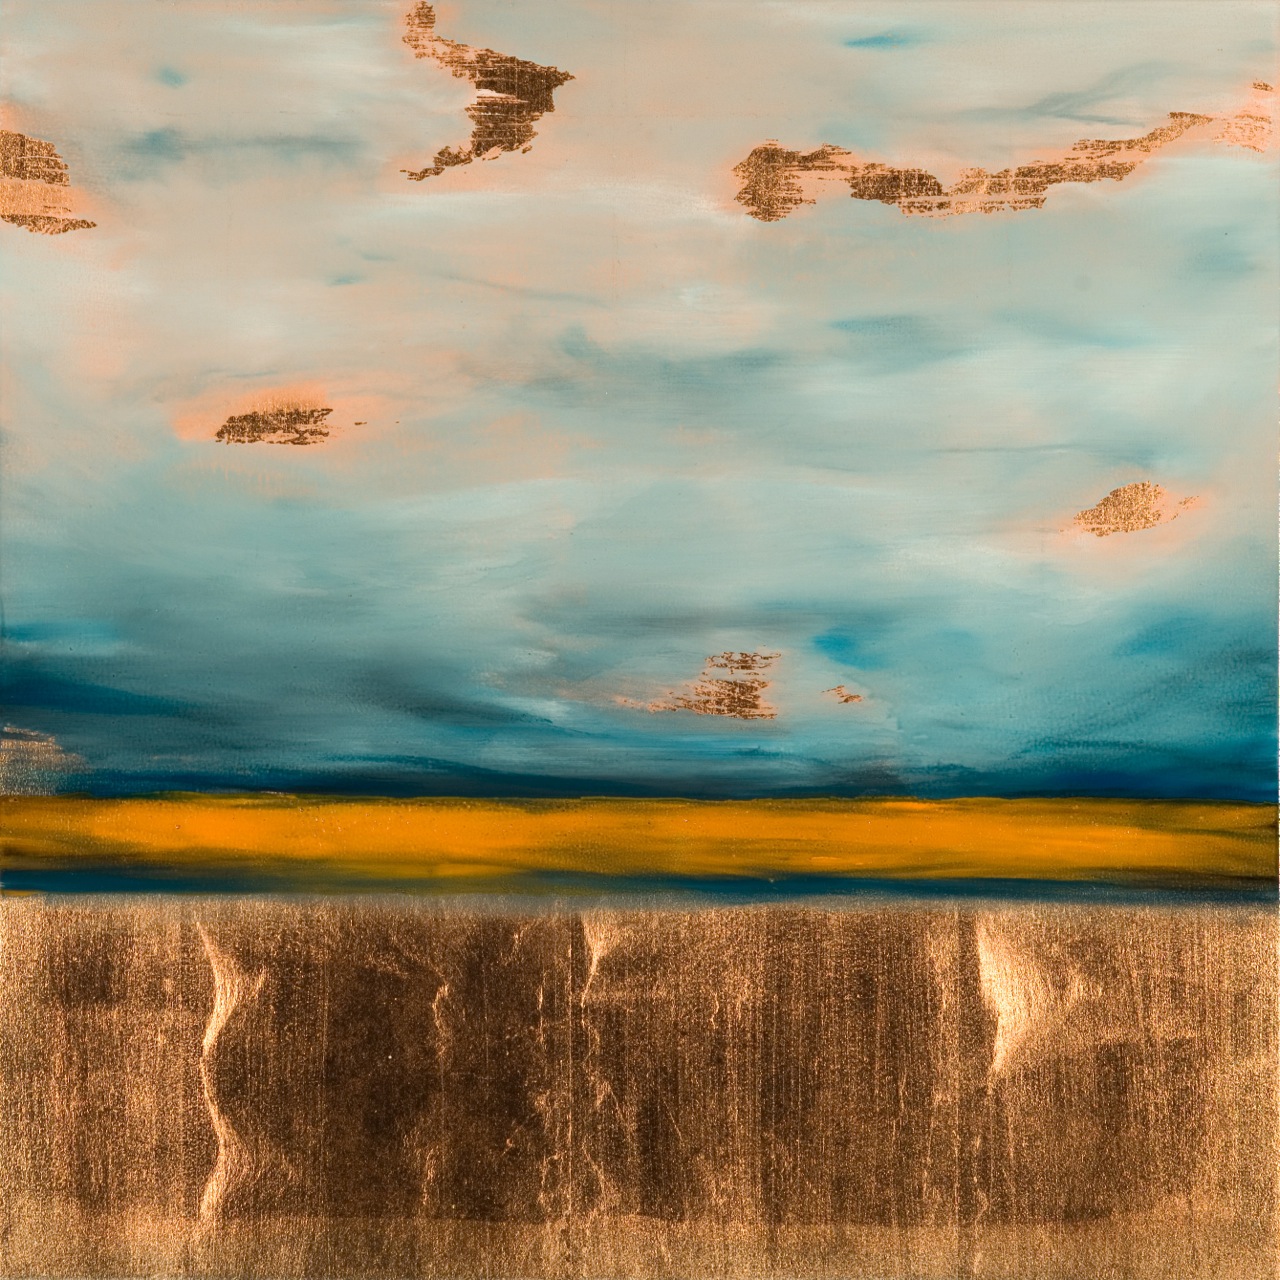 Luminous Sky by Gwyn Kohr at Les Yeux du Monde Art Gallery